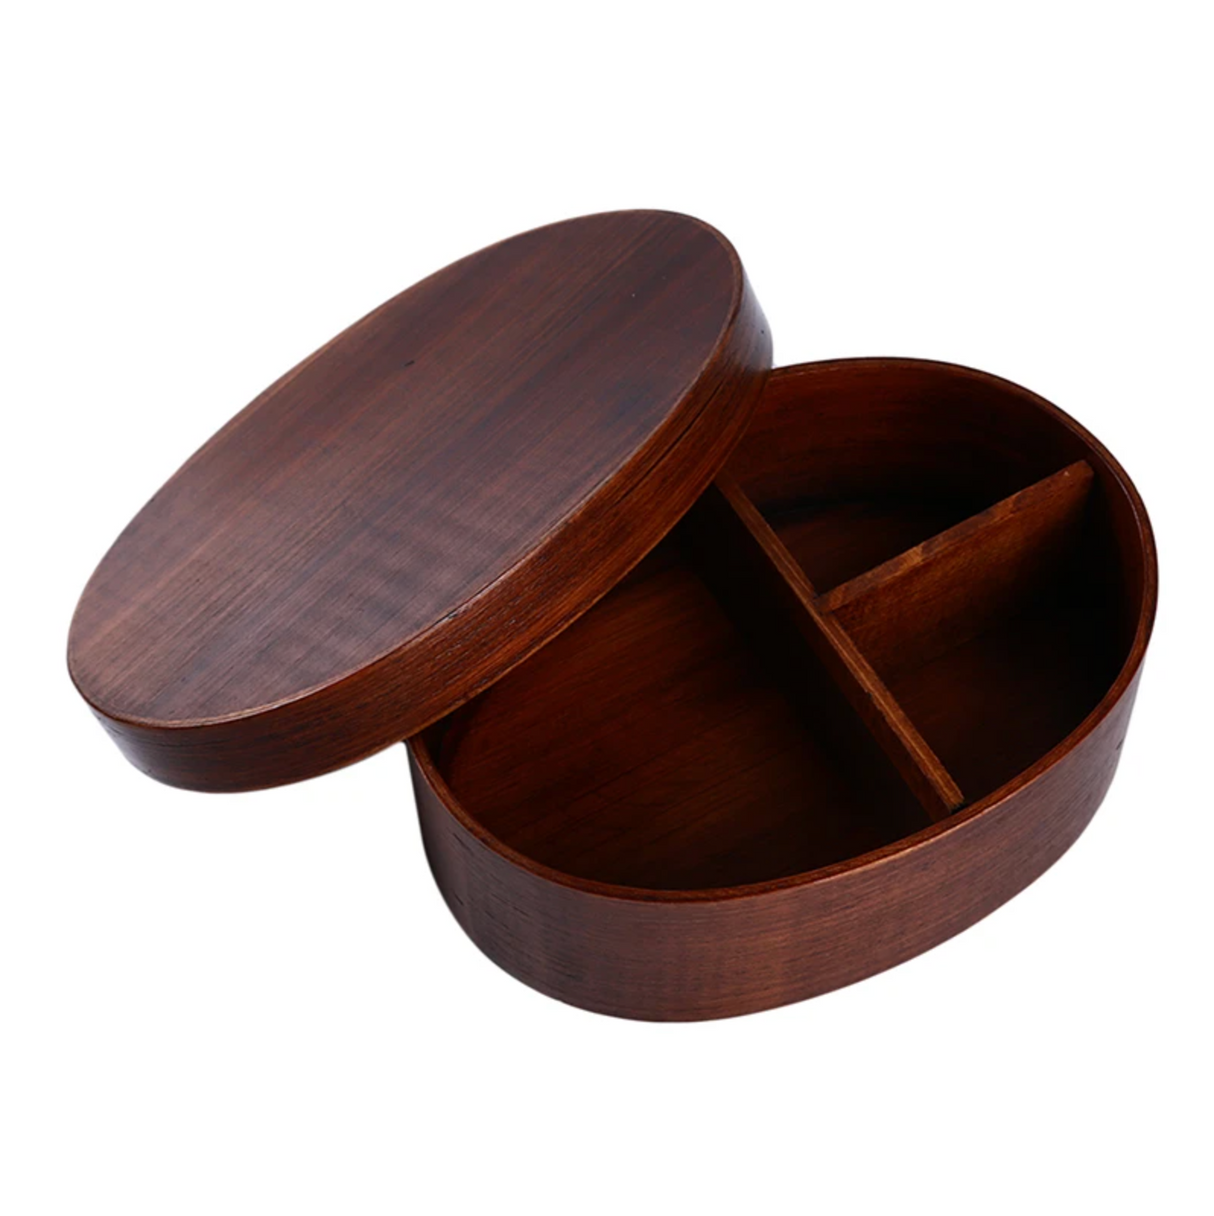 Wooden bento box